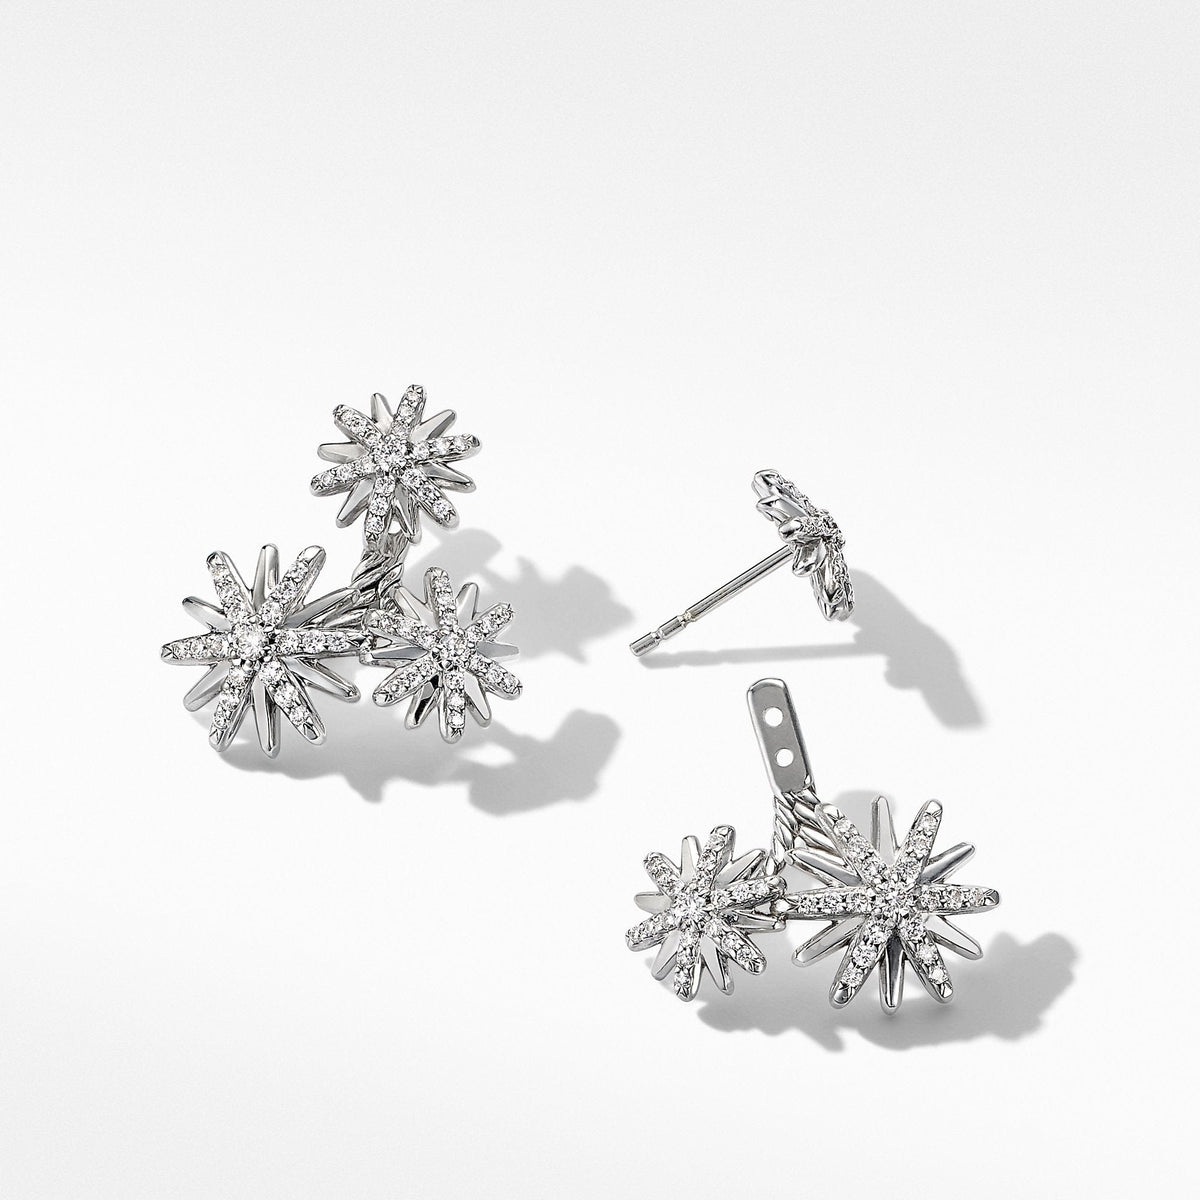 Starburst Cluster Earrings with Pavé Diamonds